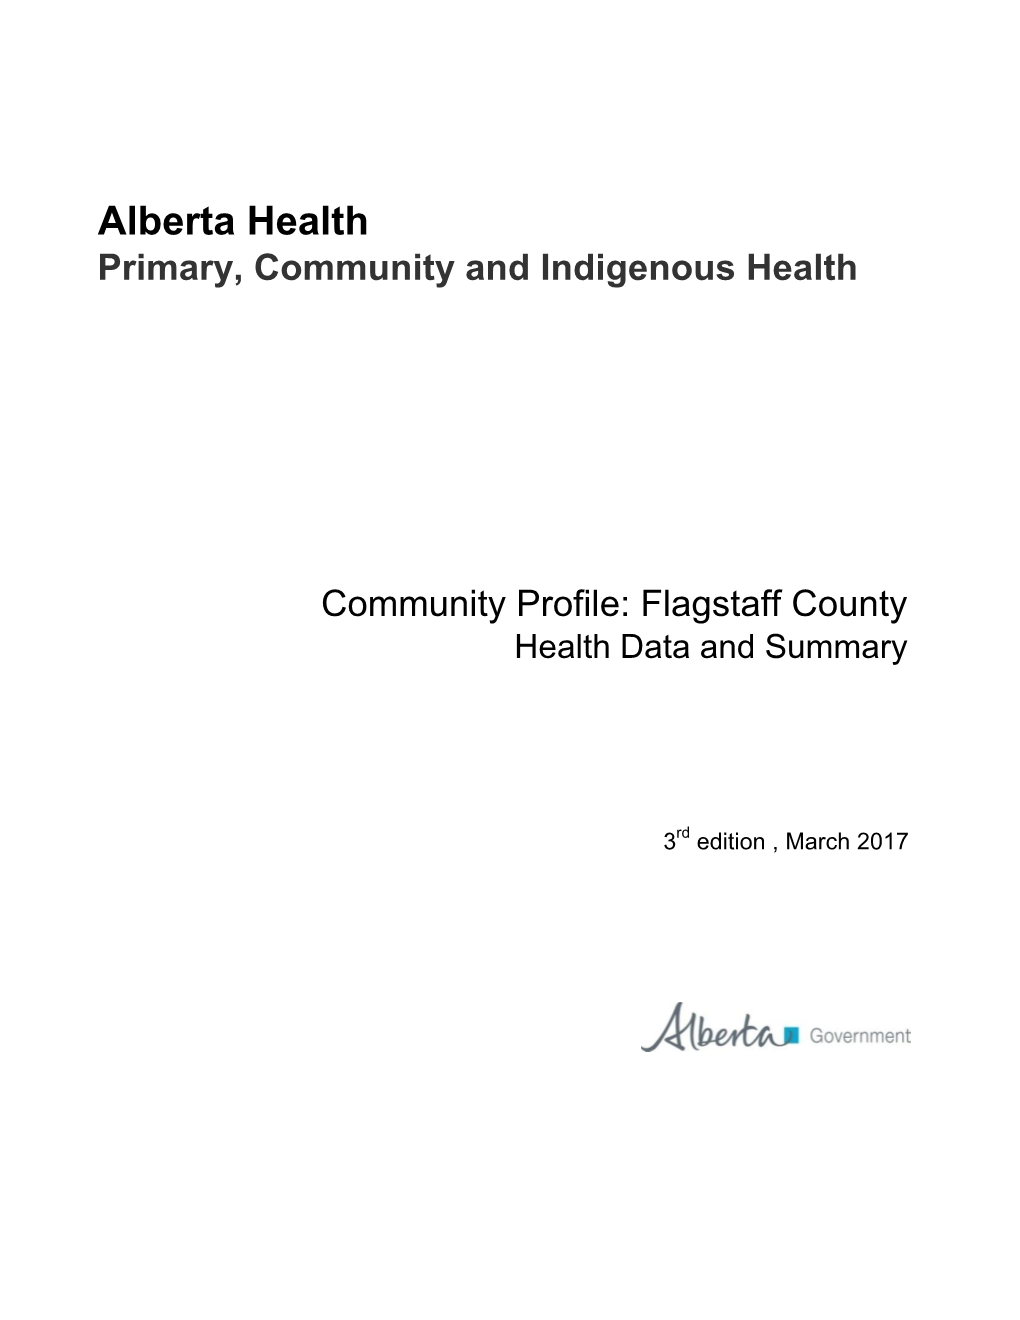 Flagstaff County Health Data and Summary